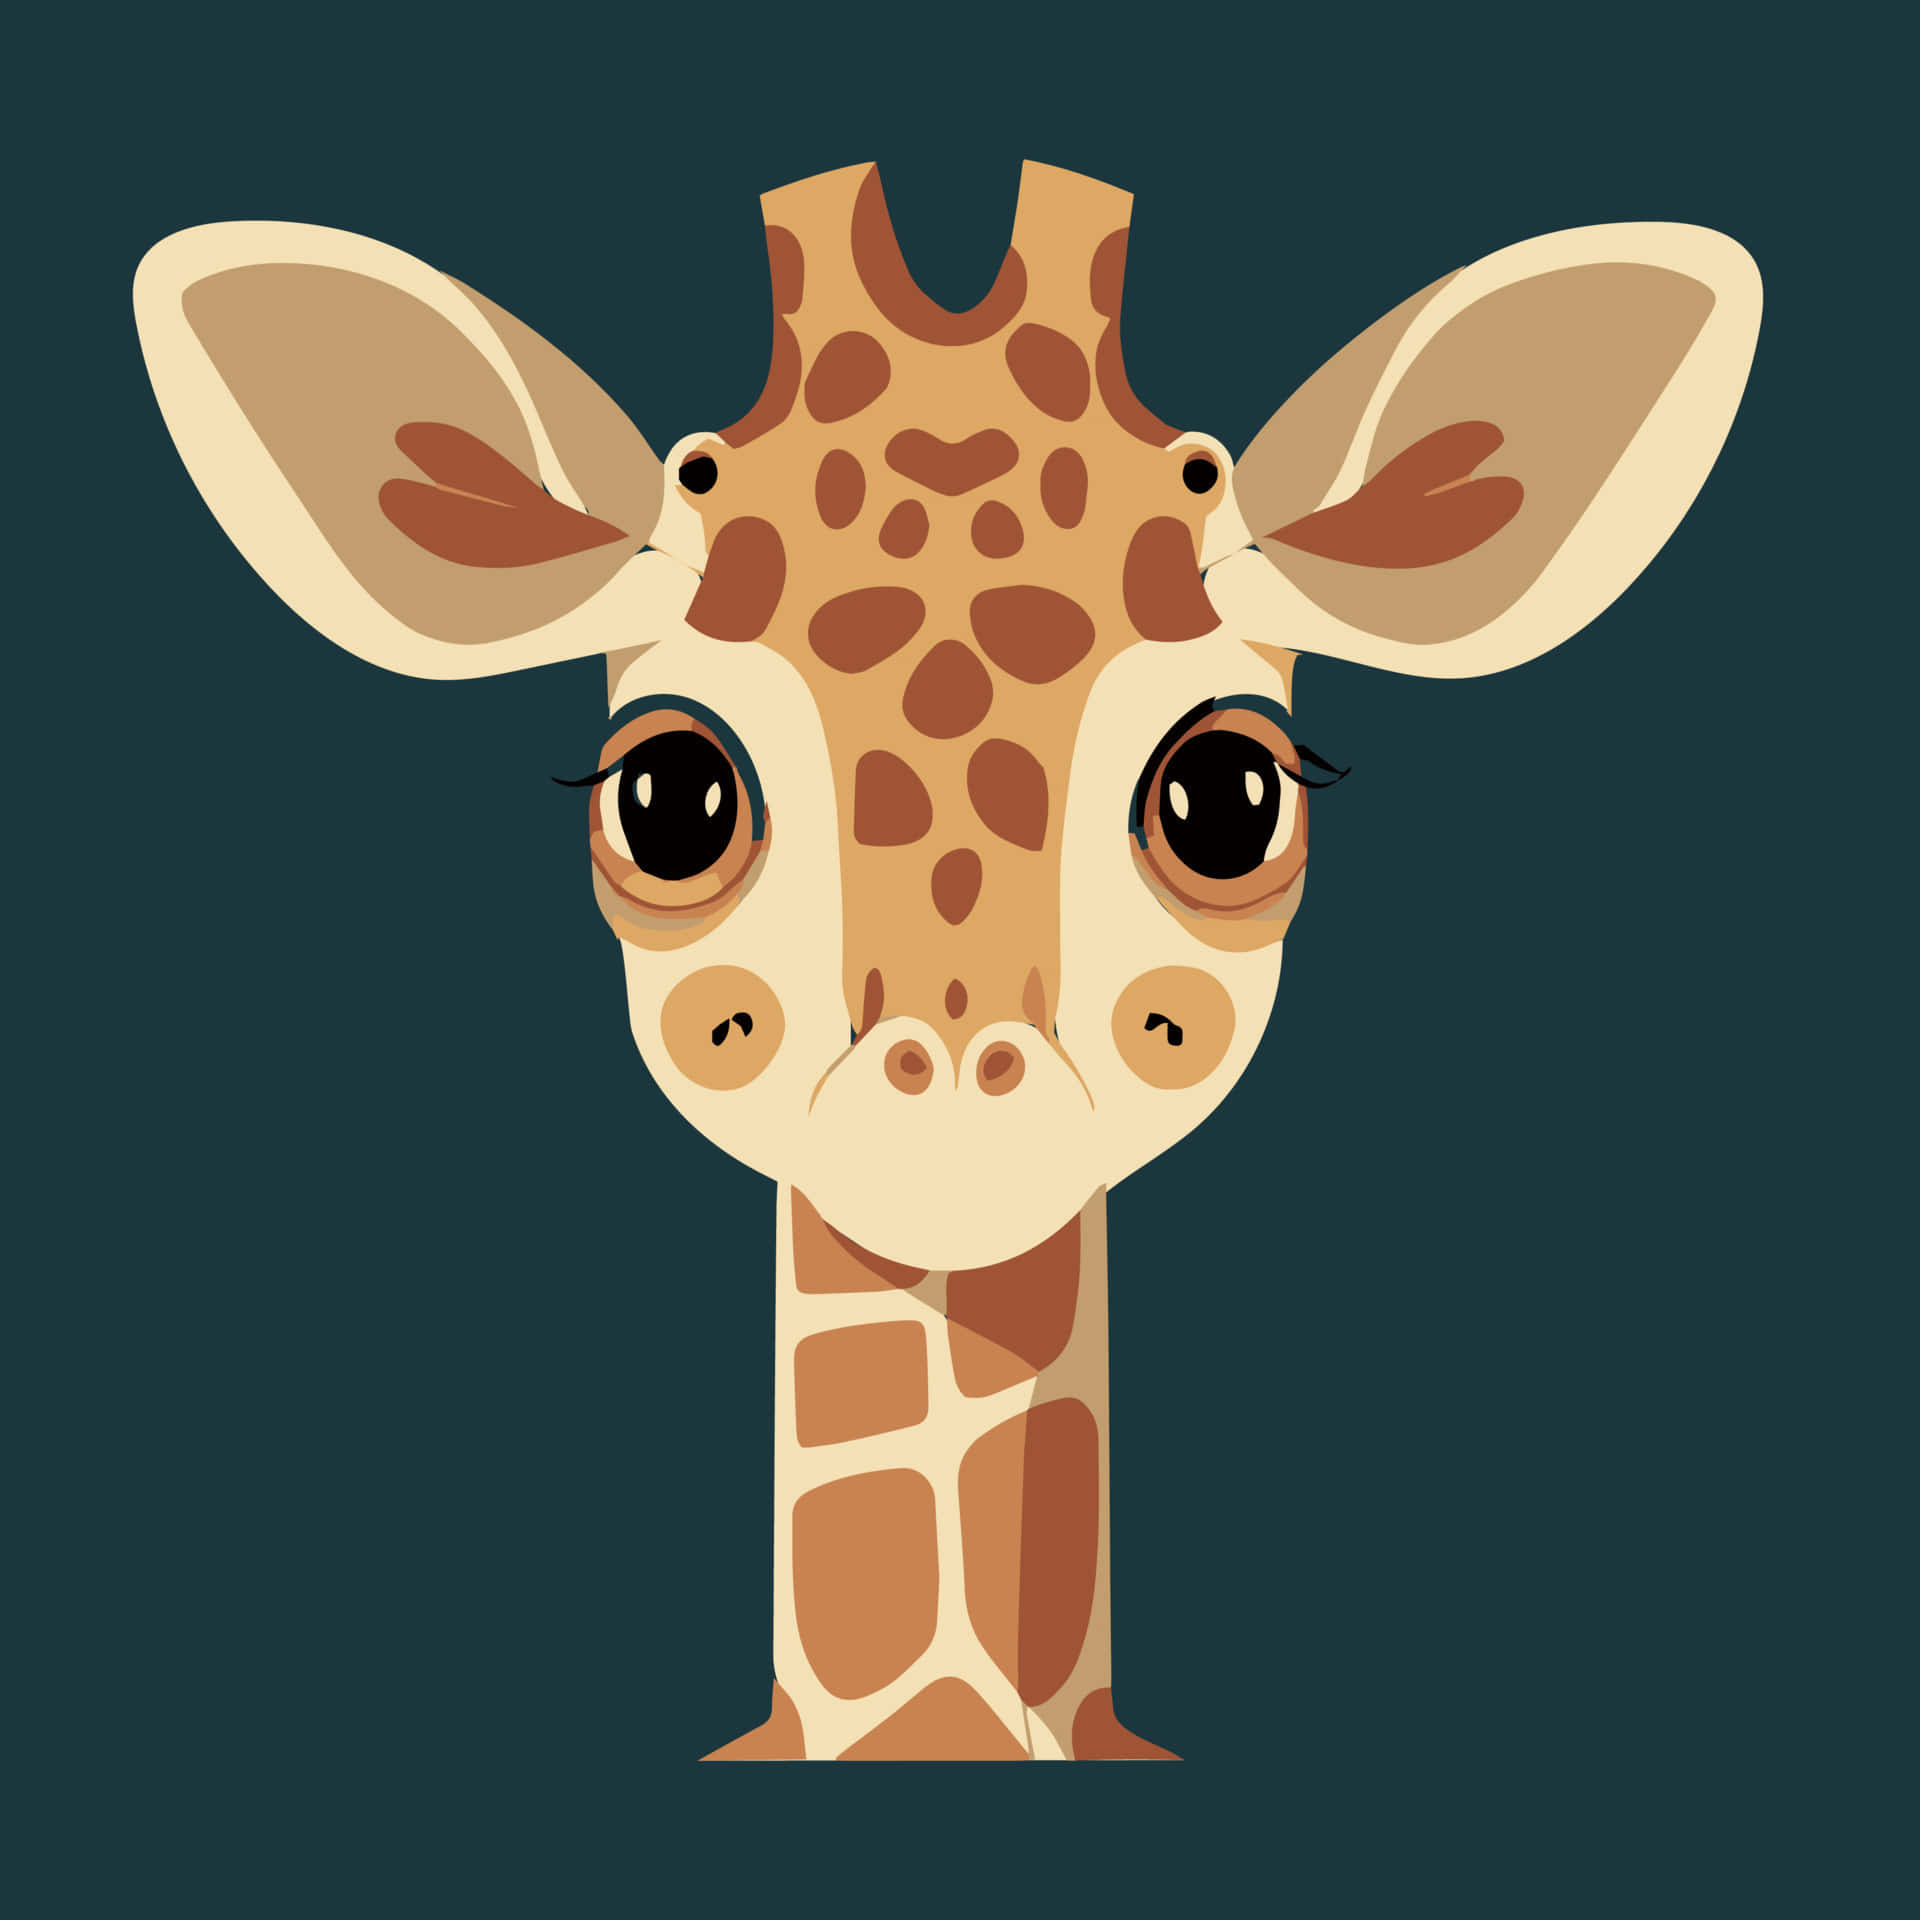 Adorable Kawaii Giraffe Smiling Brightly Wallpaper